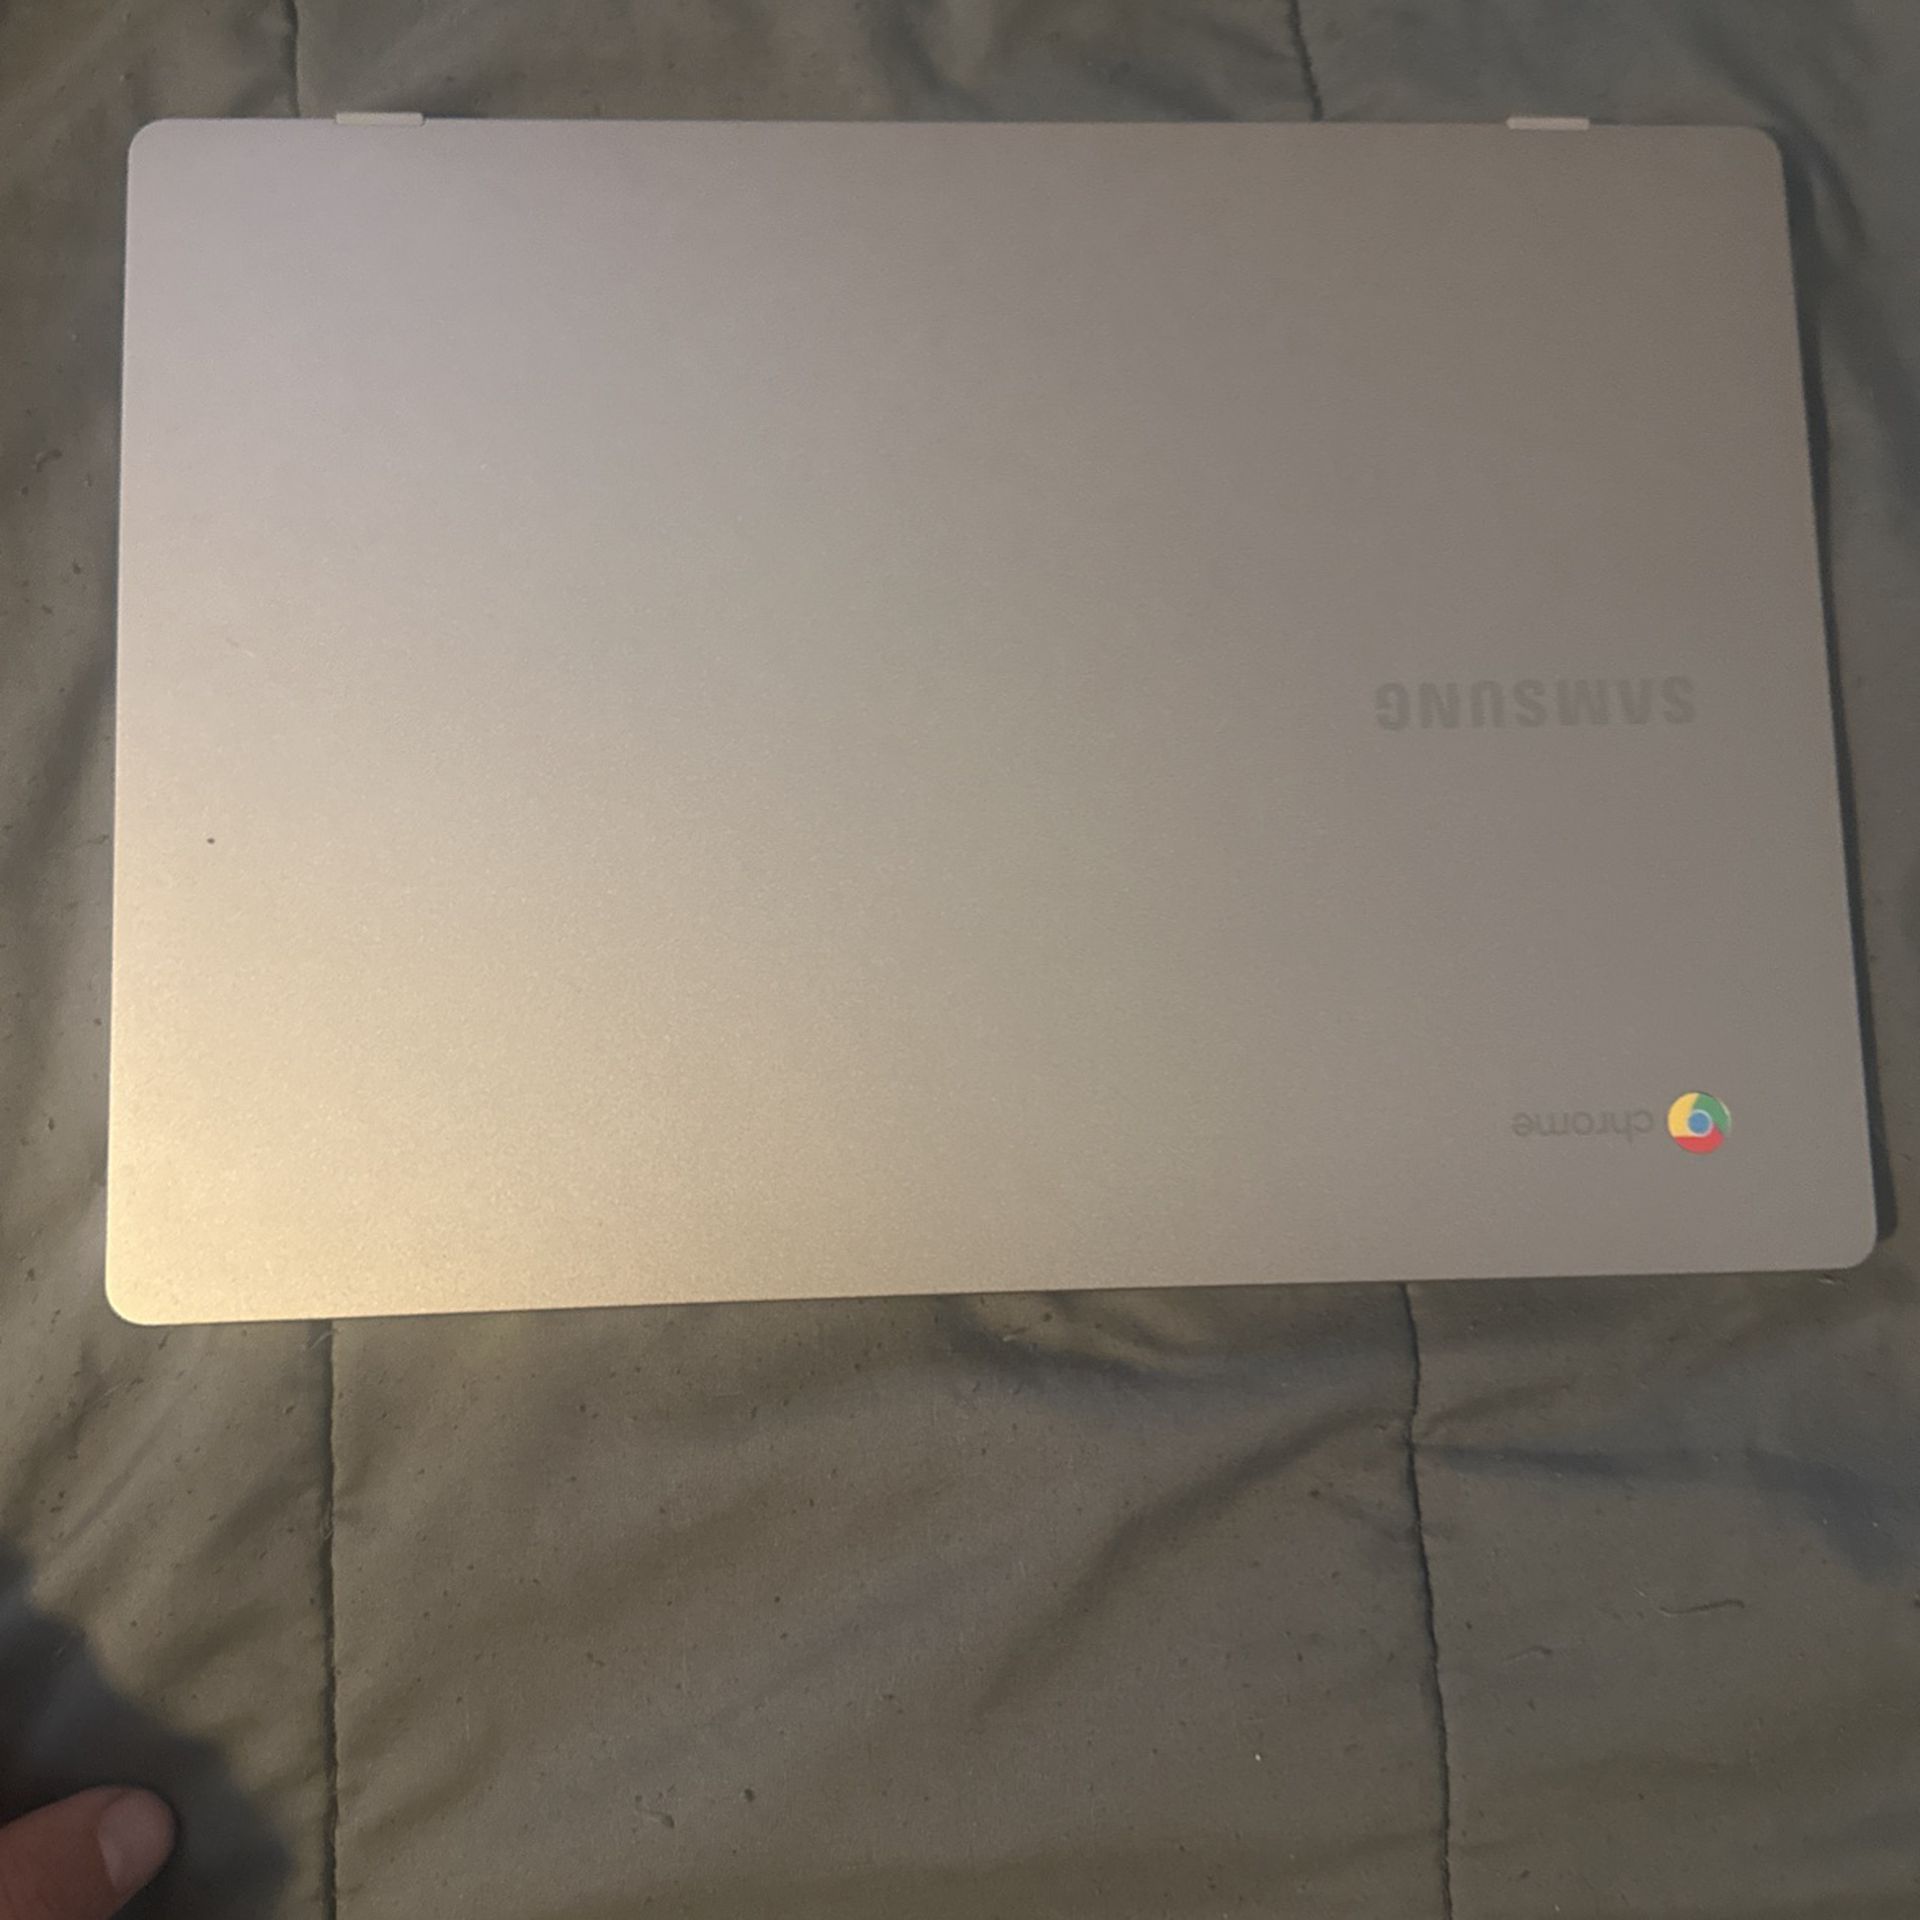 Samsung Chromebook Like New 90$